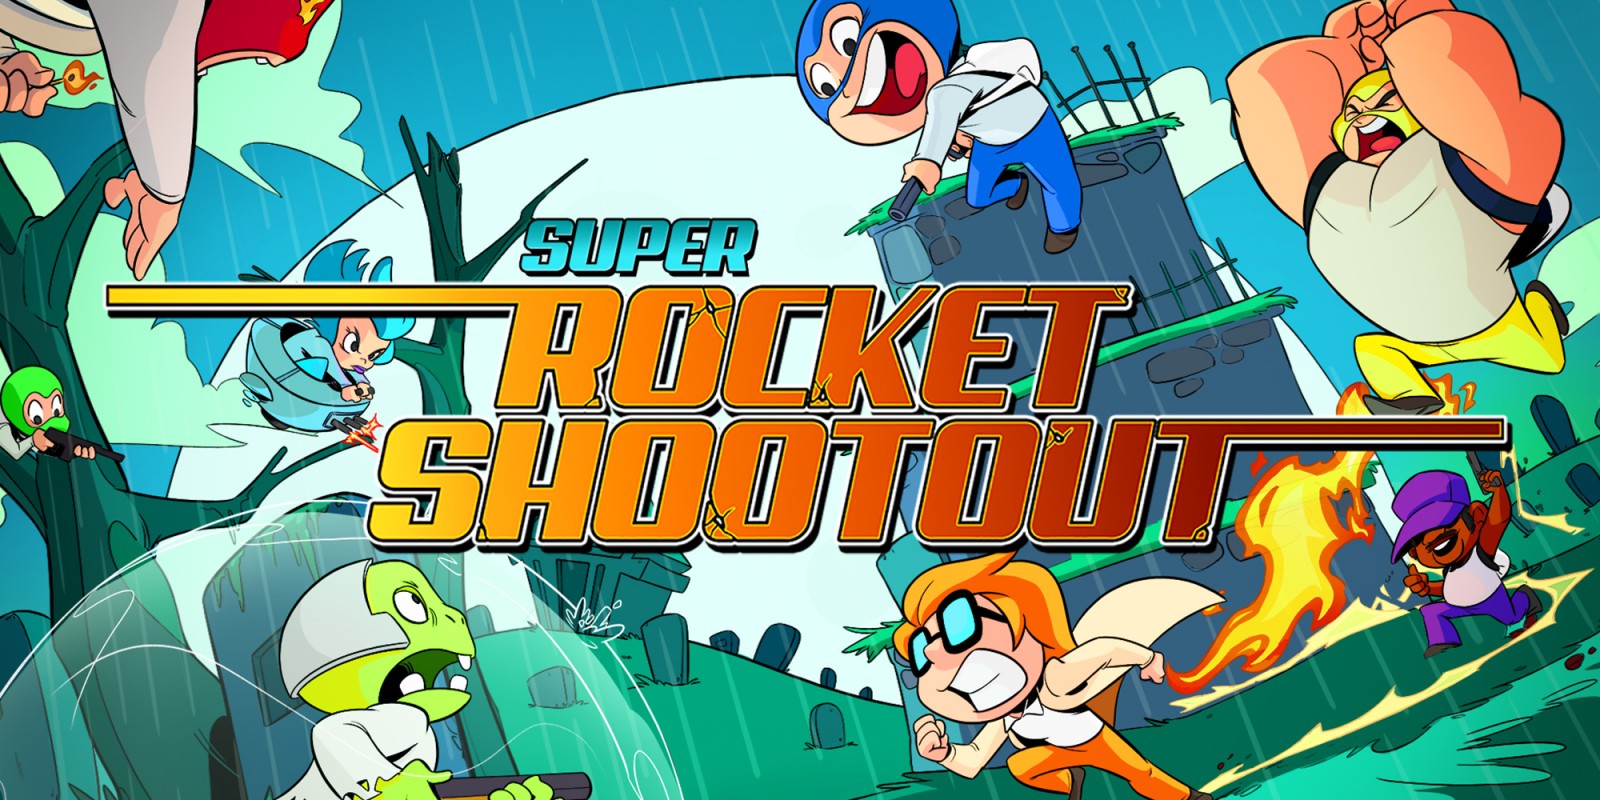 Super Rocket Shootout | Nintendo Switch download software | Games | Nintendo